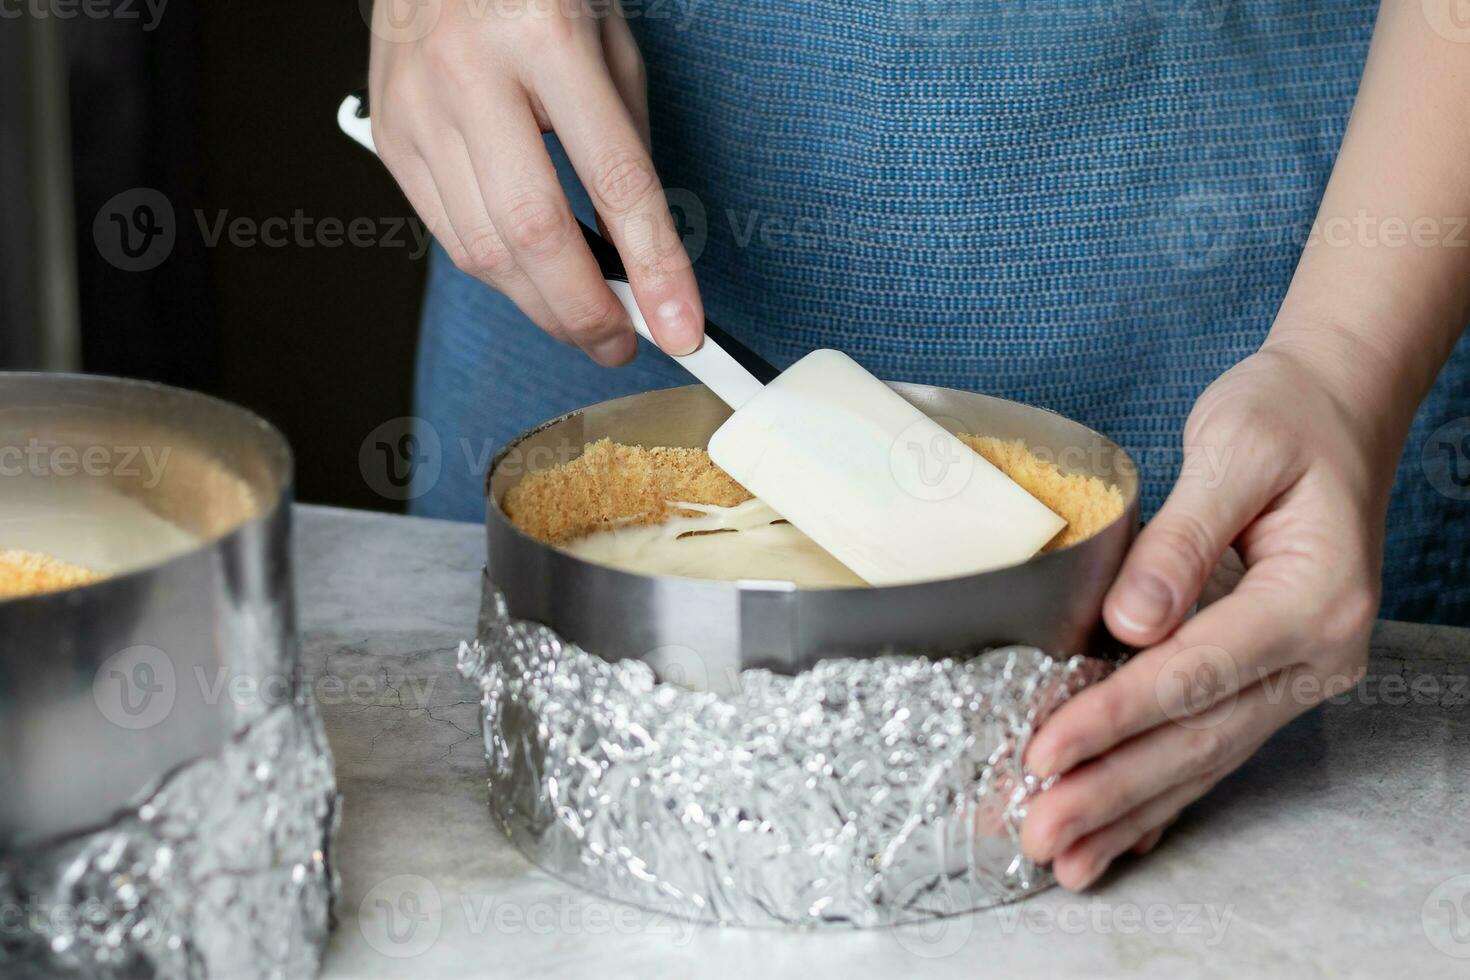 femme fabrication cheesecake, elle pose le fromage couche, proche en haut photo nourriture